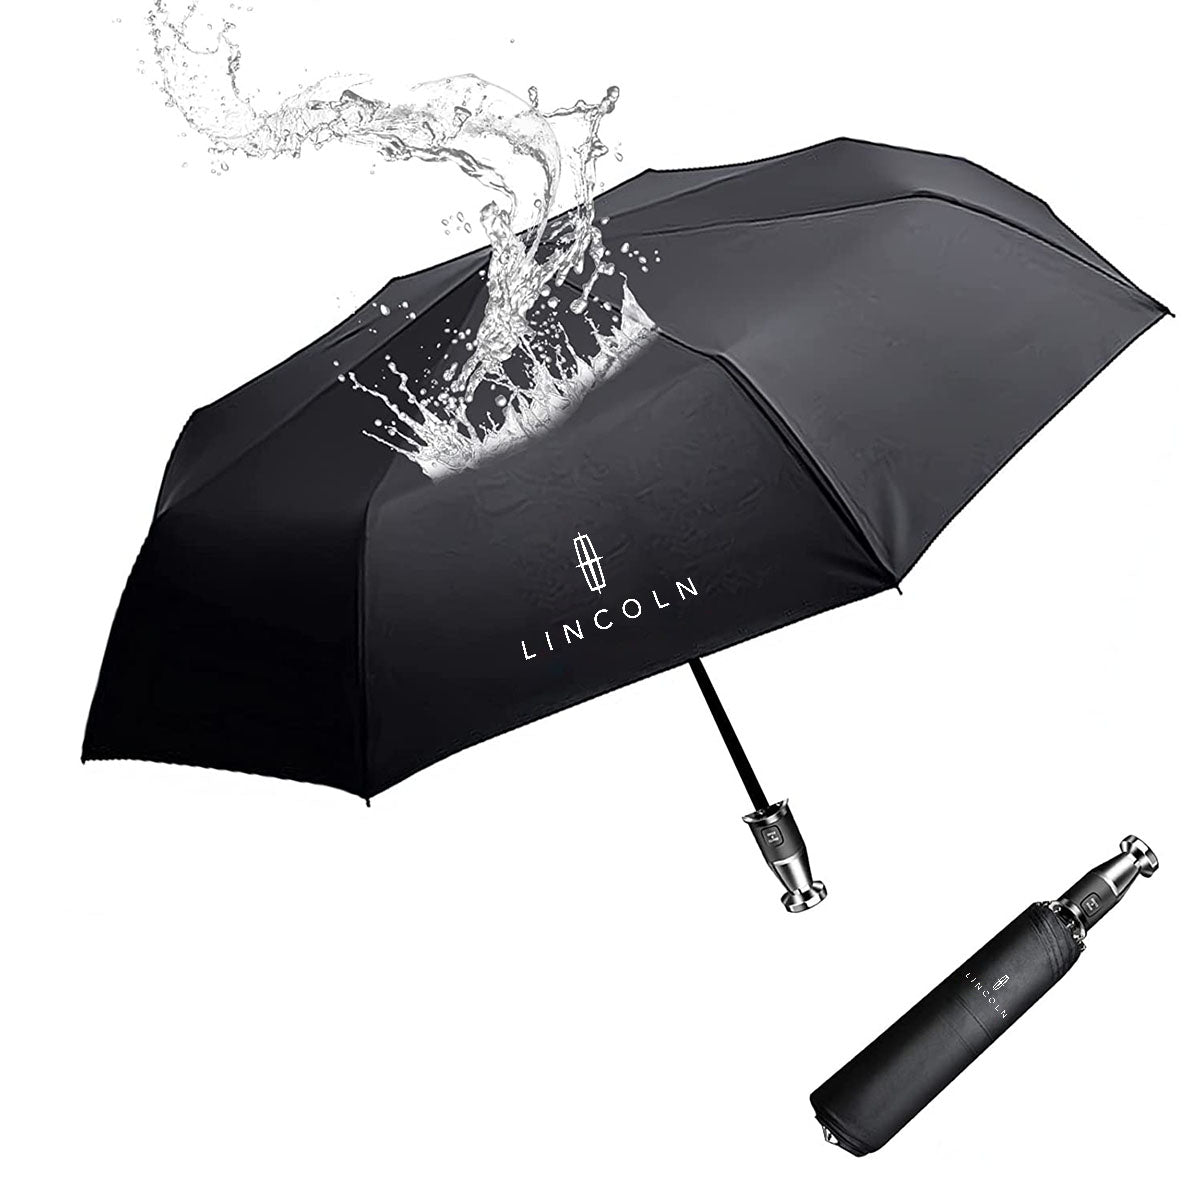 Umbrella for All Cars, 10 Ribs Umbrella Windproof Automatic Folding Umbrella, One-handed use, Rain and Sun Protection, Car Accessories LI13993